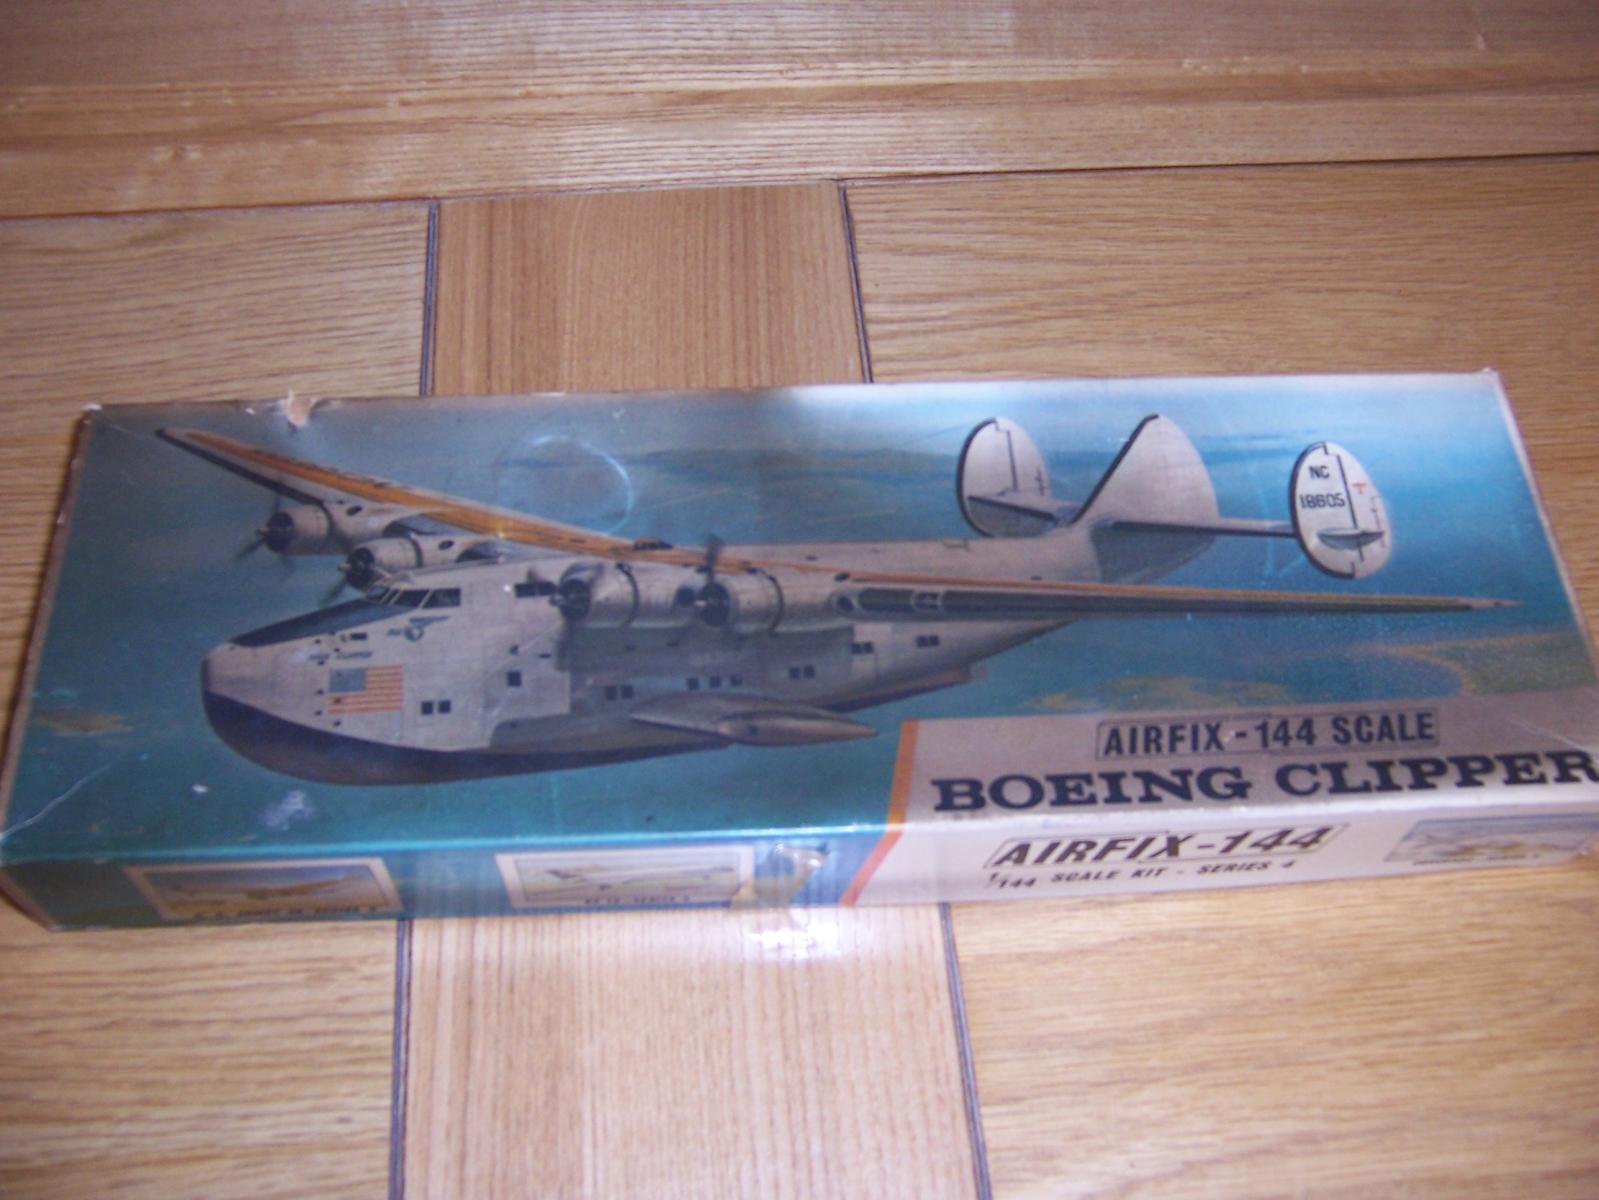 NEW Vintage Model Kit 1/144  Military AirFix Trans Atlantic Clipper Plane